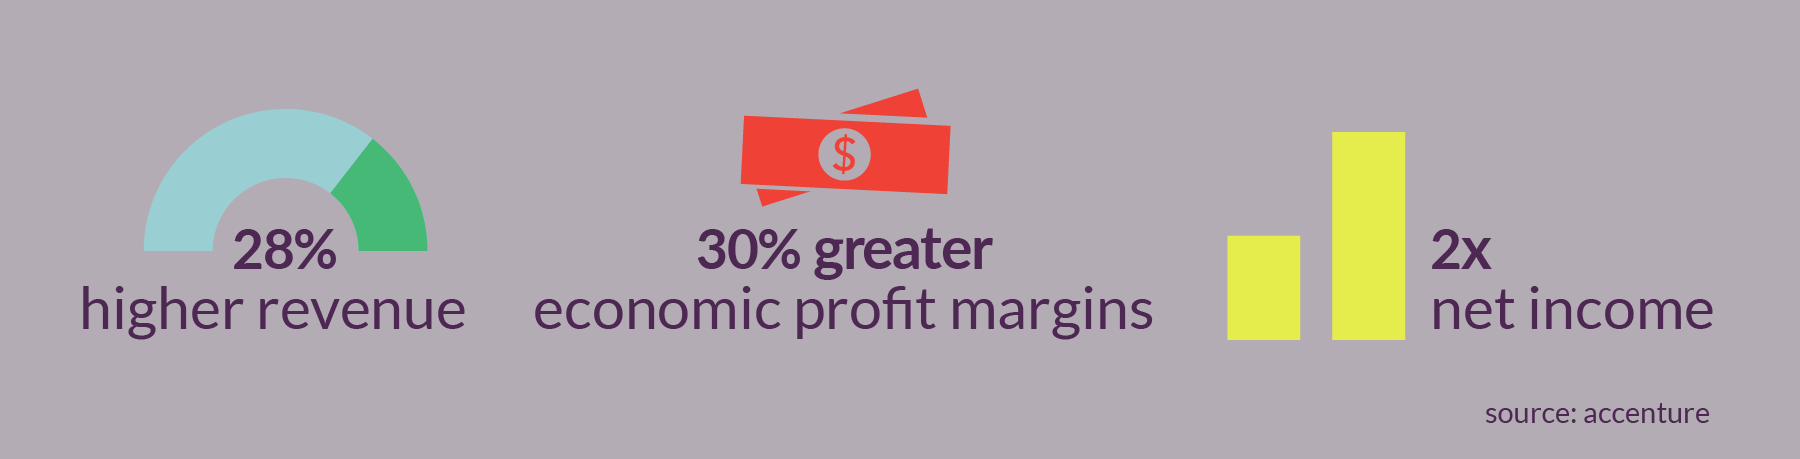 28% higher revenue | 30% greater economic profit margins | 2 times net income